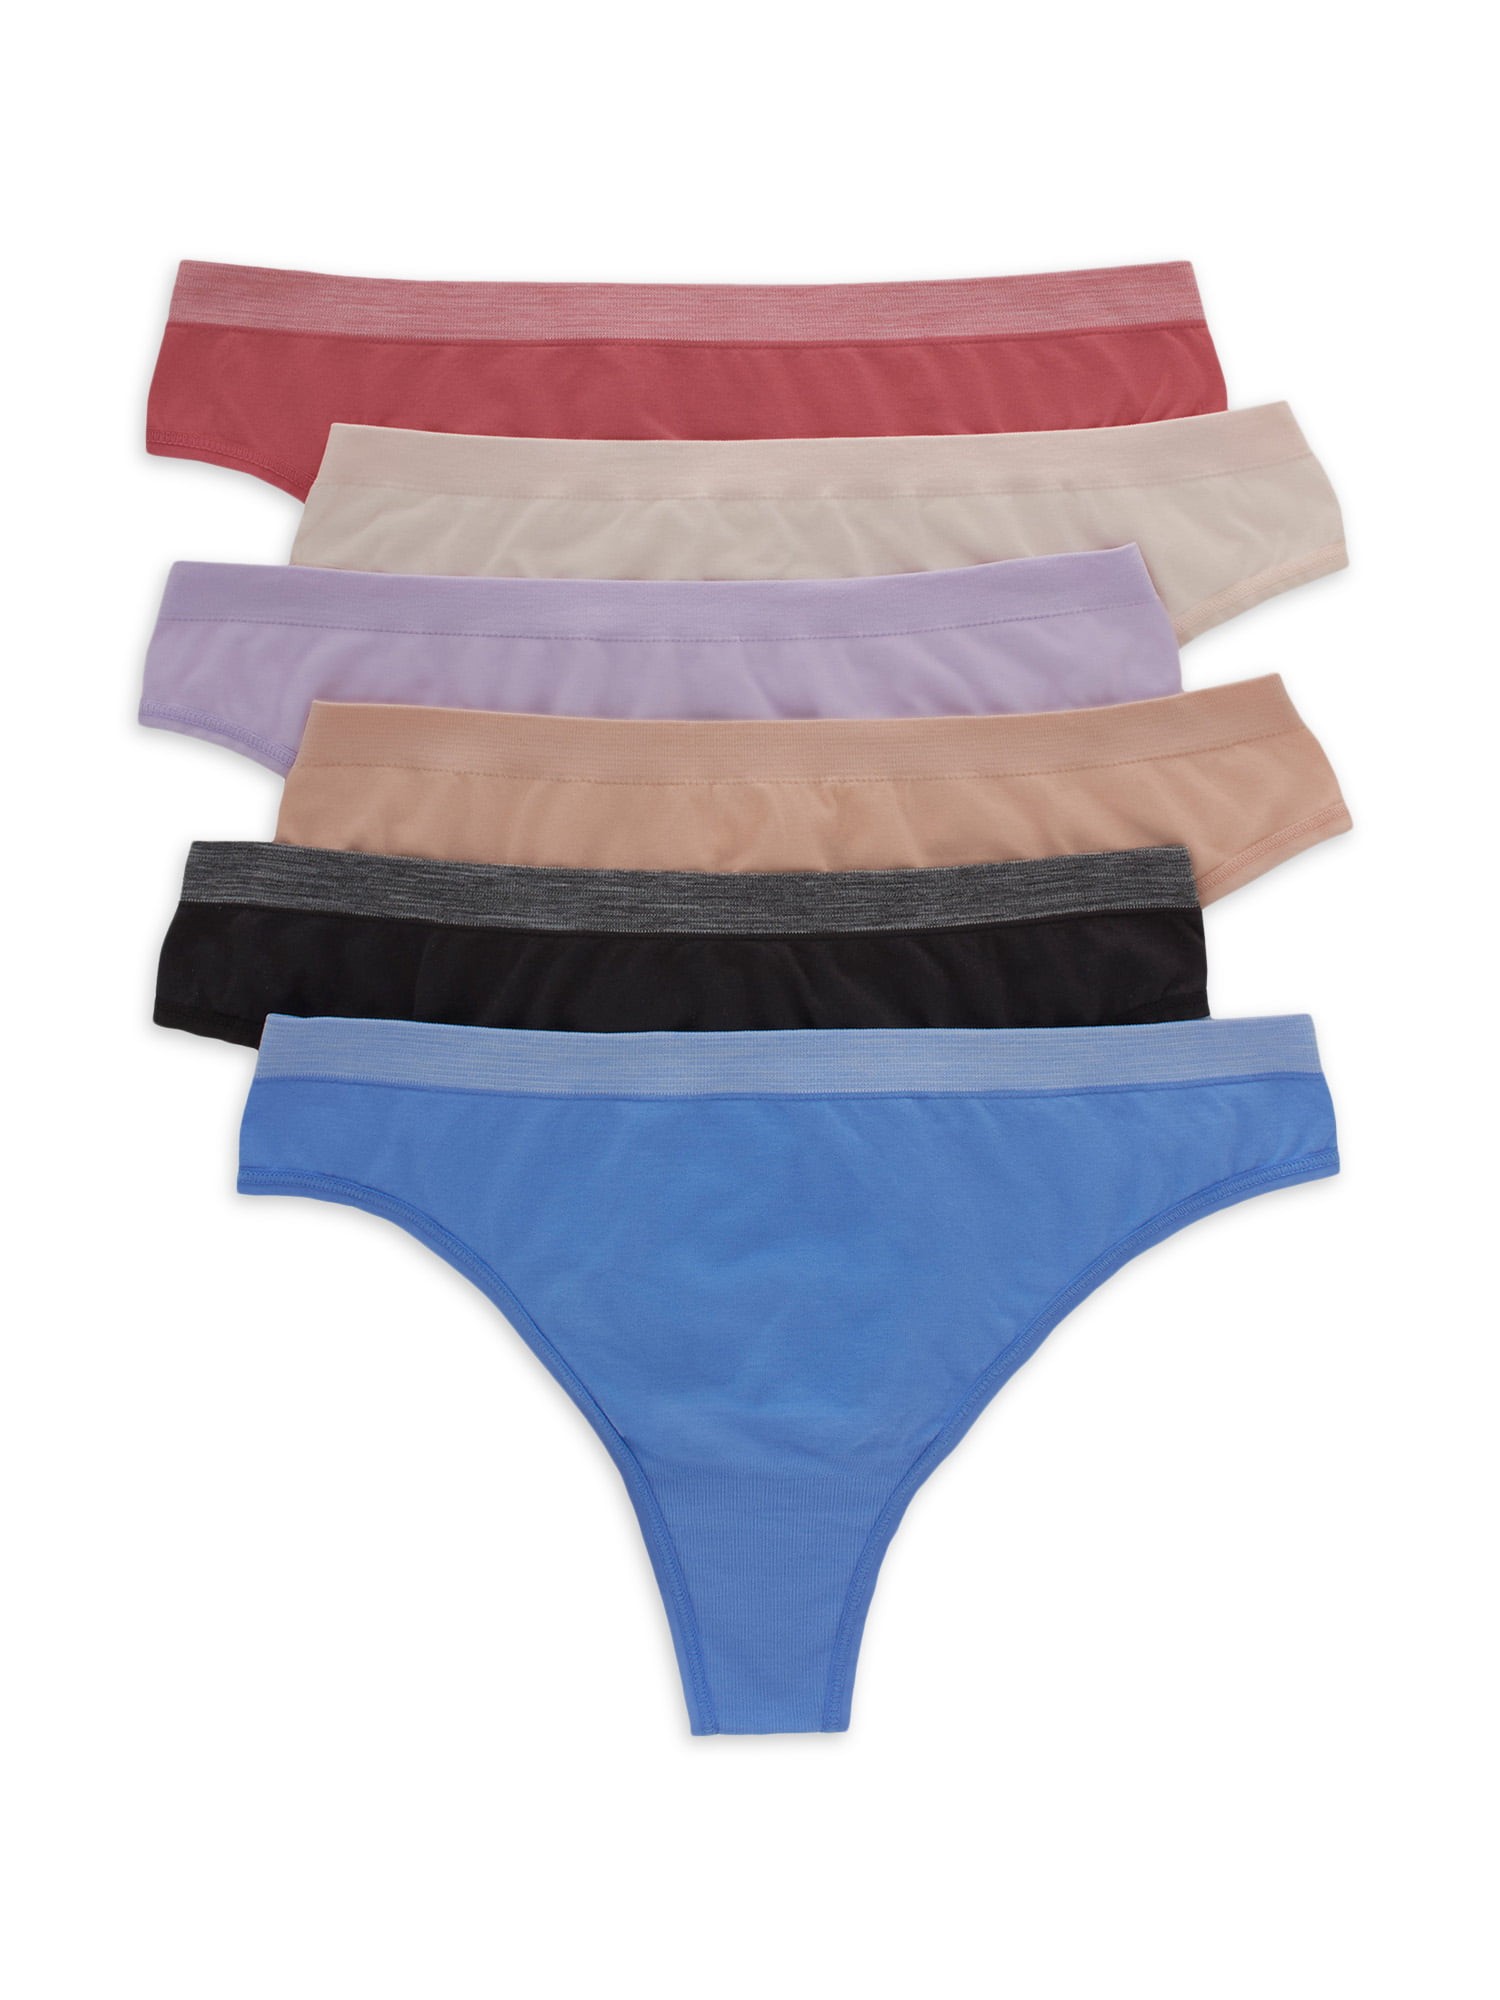 Hanes Ultimate Women's Breathable Cotton Bikini Underwear, 6-Pack